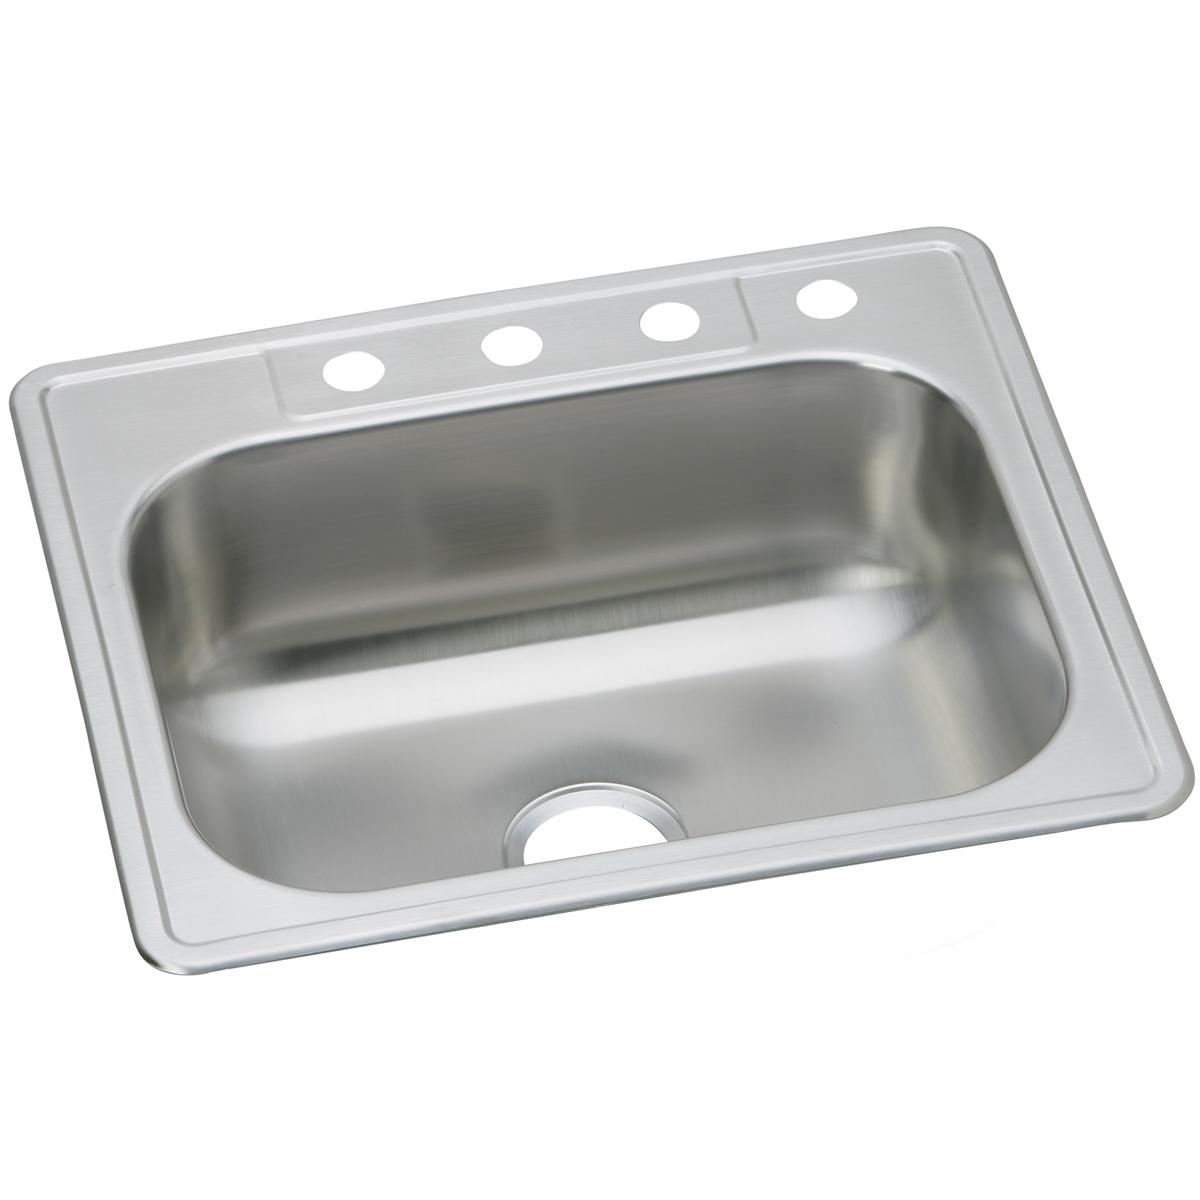 Elkay Dayton 25" x 22" x 8-1/16" Single Bowl Stainless Steel Drop-in Sink